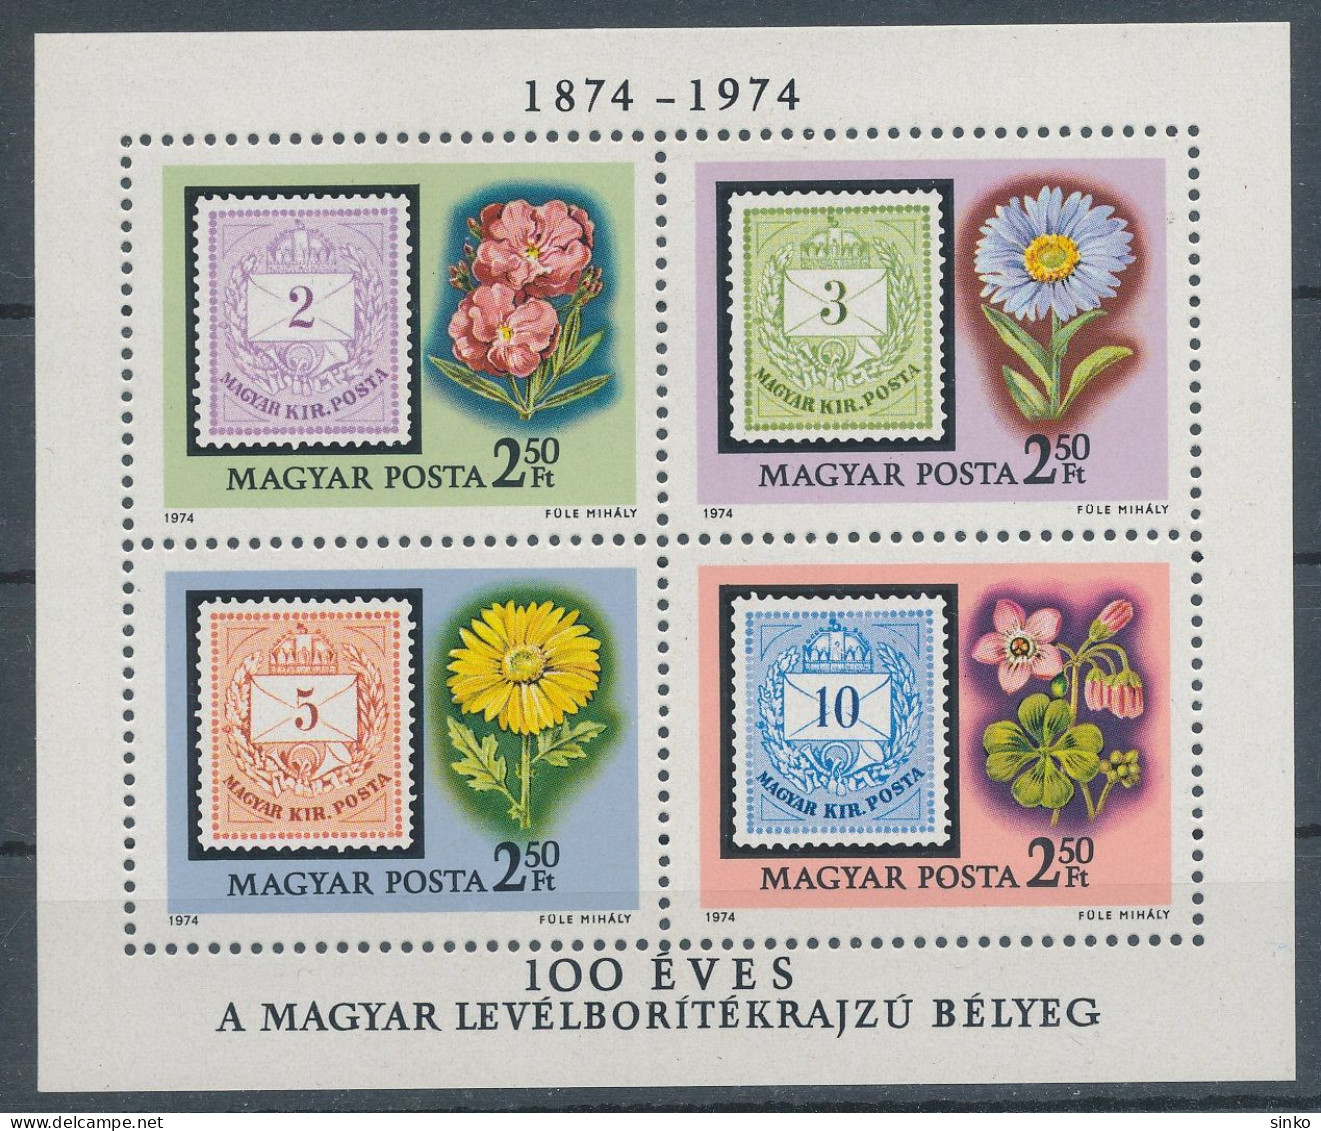 1974. The Letter Envelope Designed Stamp Is 100 Year Old - Block- Misprint - Errors, Freaks & Oddities (EFO)